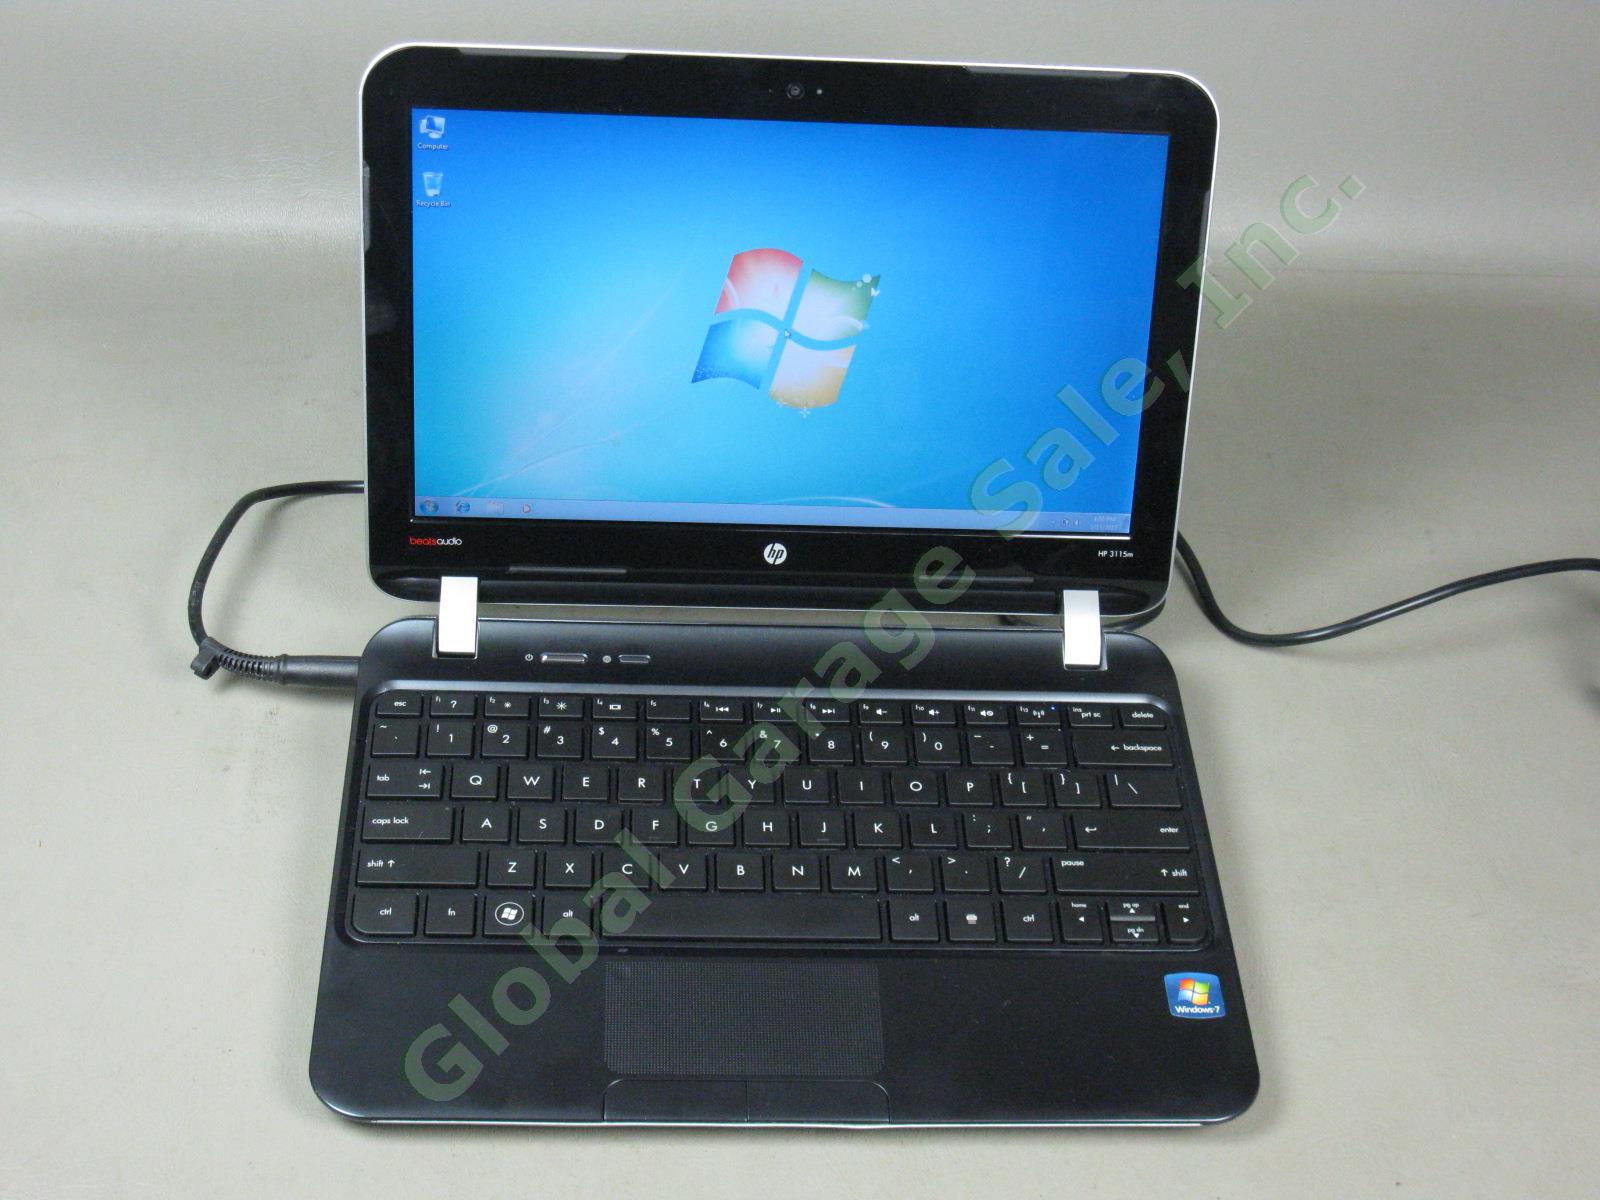 HP 3115m Notebook Laptop Computer AMD E-450 1.65GHz 4GB 320GB Windows 7 Ult NR!